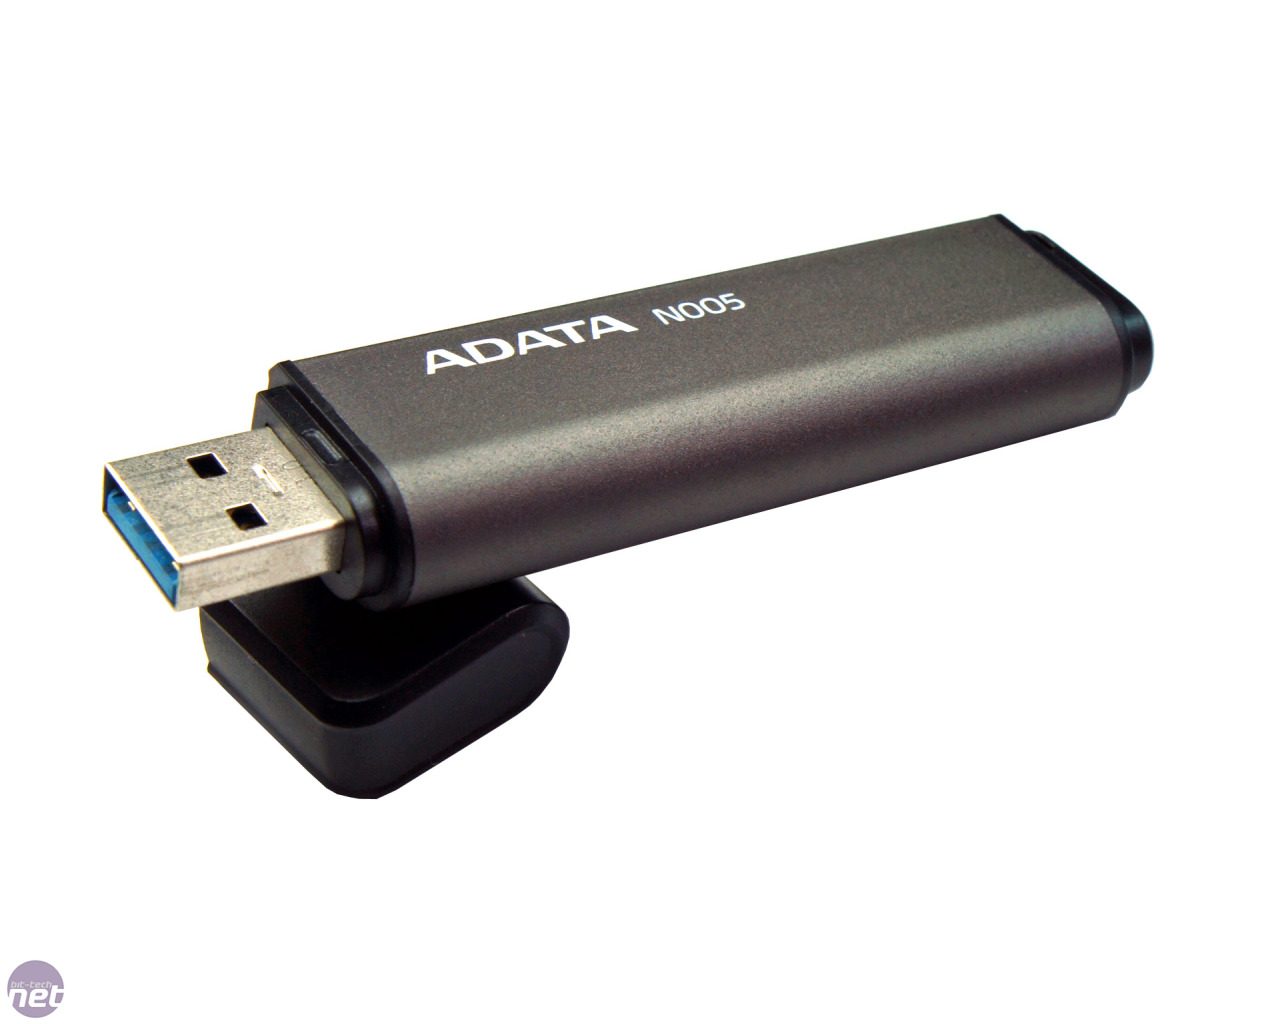 Adata 16gb Usb Flash Drive images